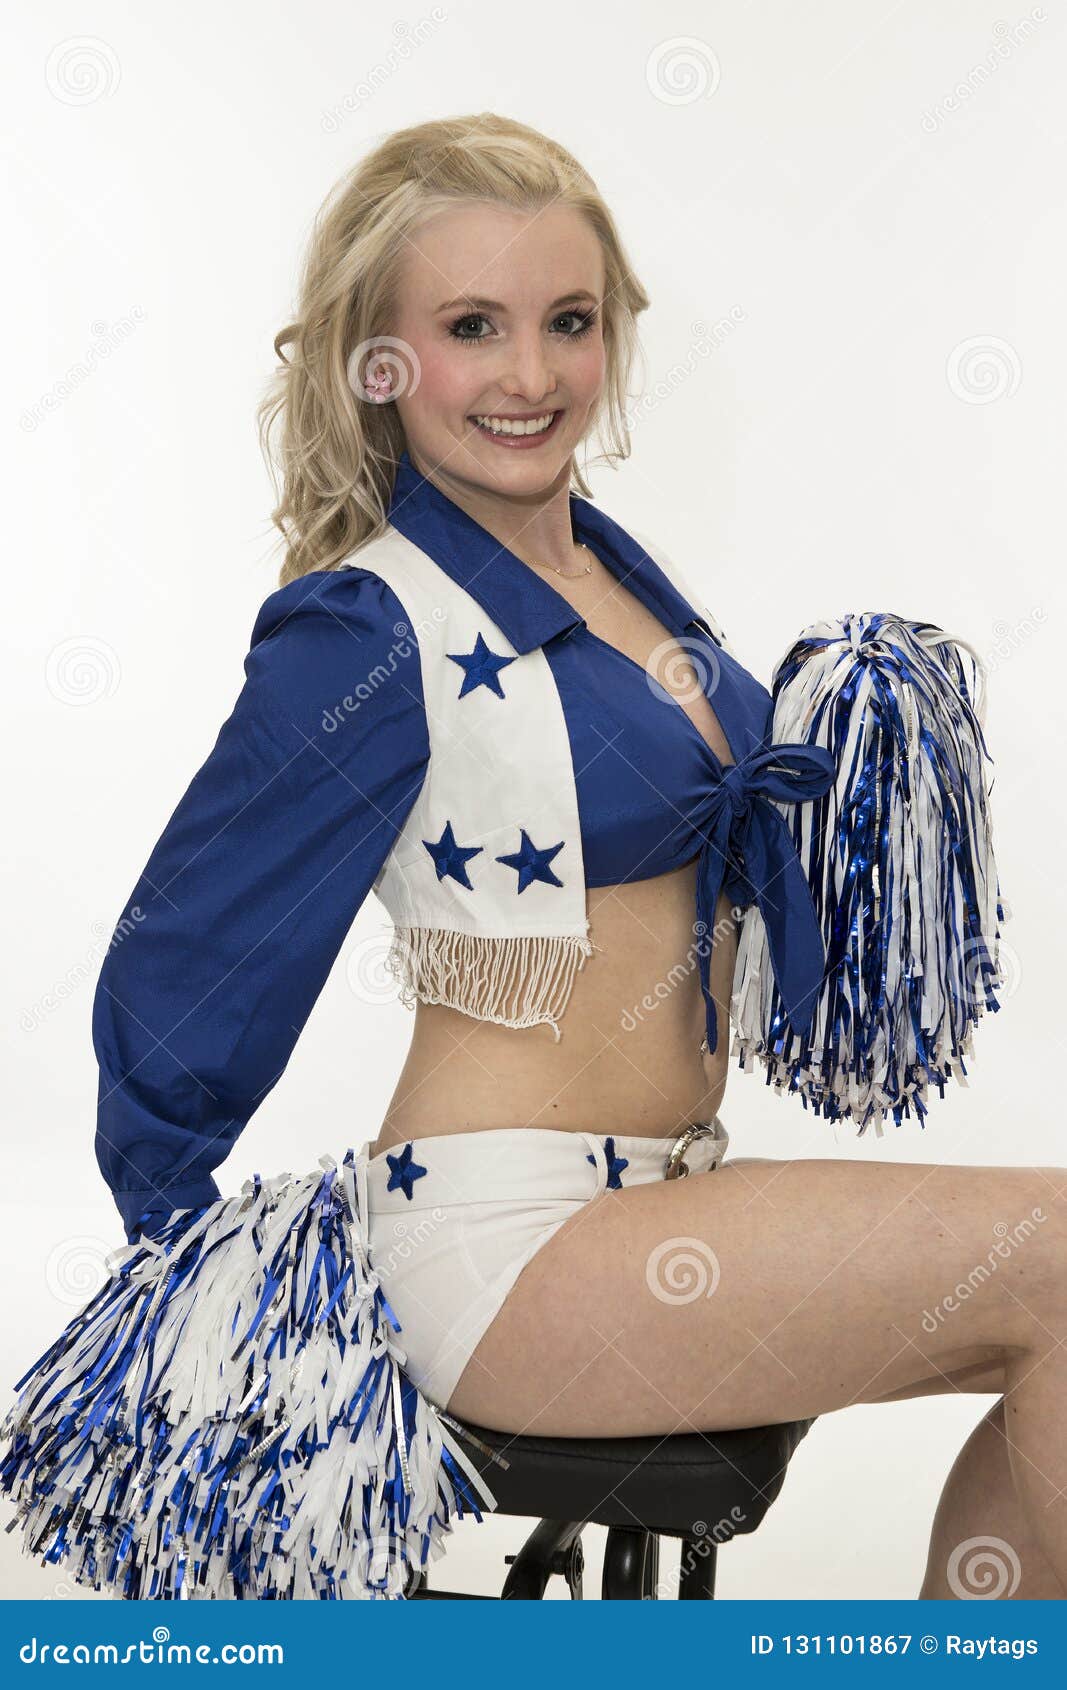 dallas cowboy cheerleader costume women